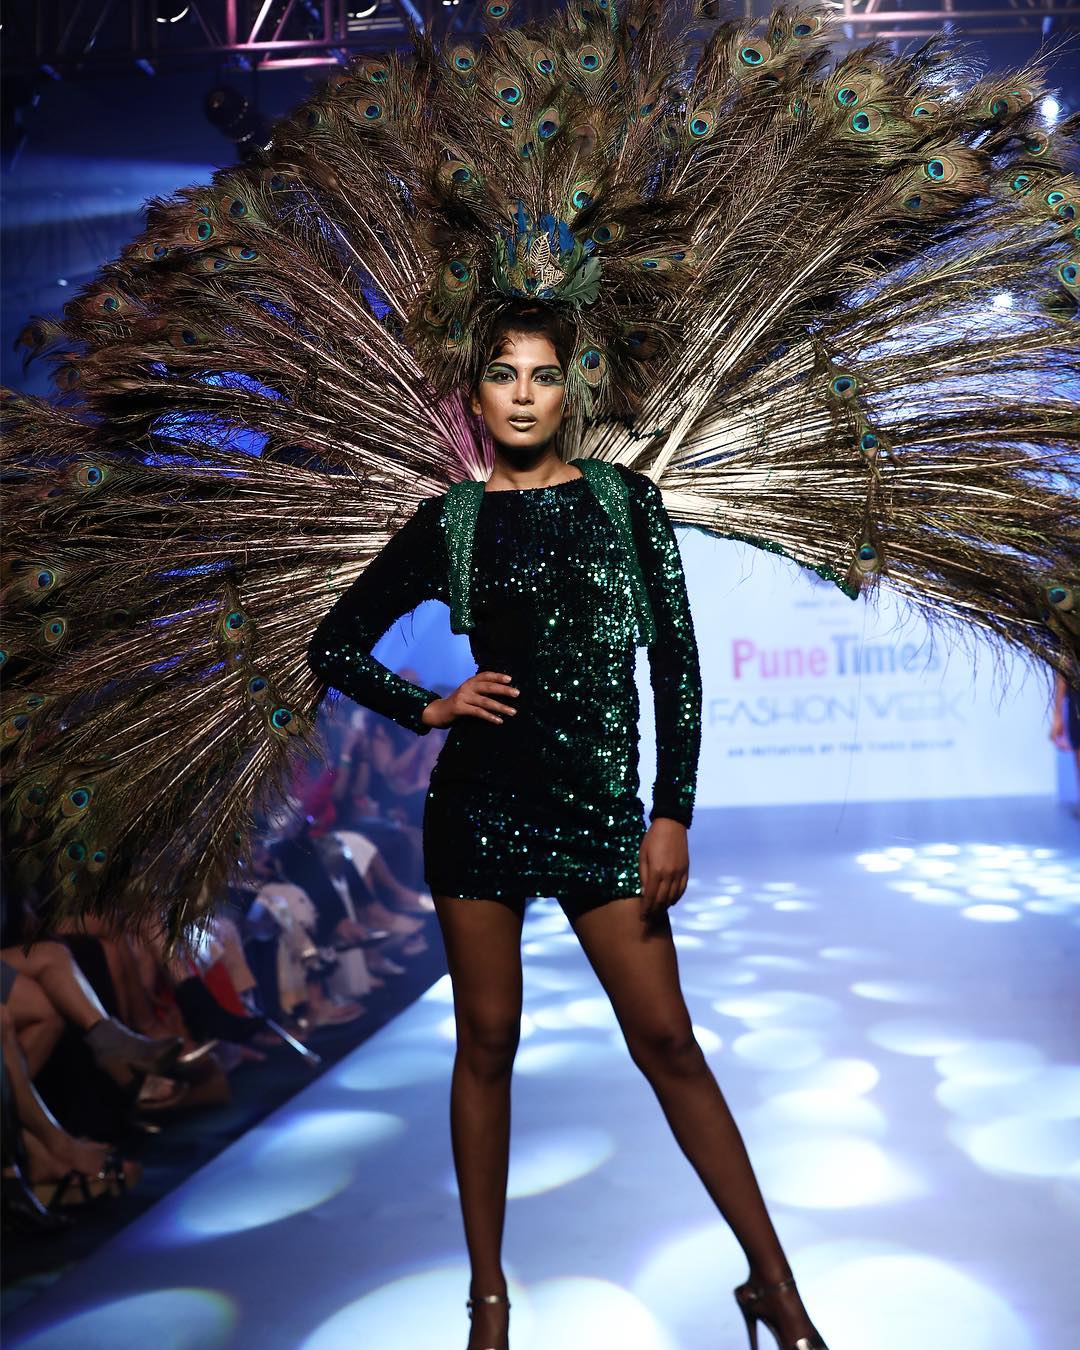 Pune Times Fashion Week, 2018.